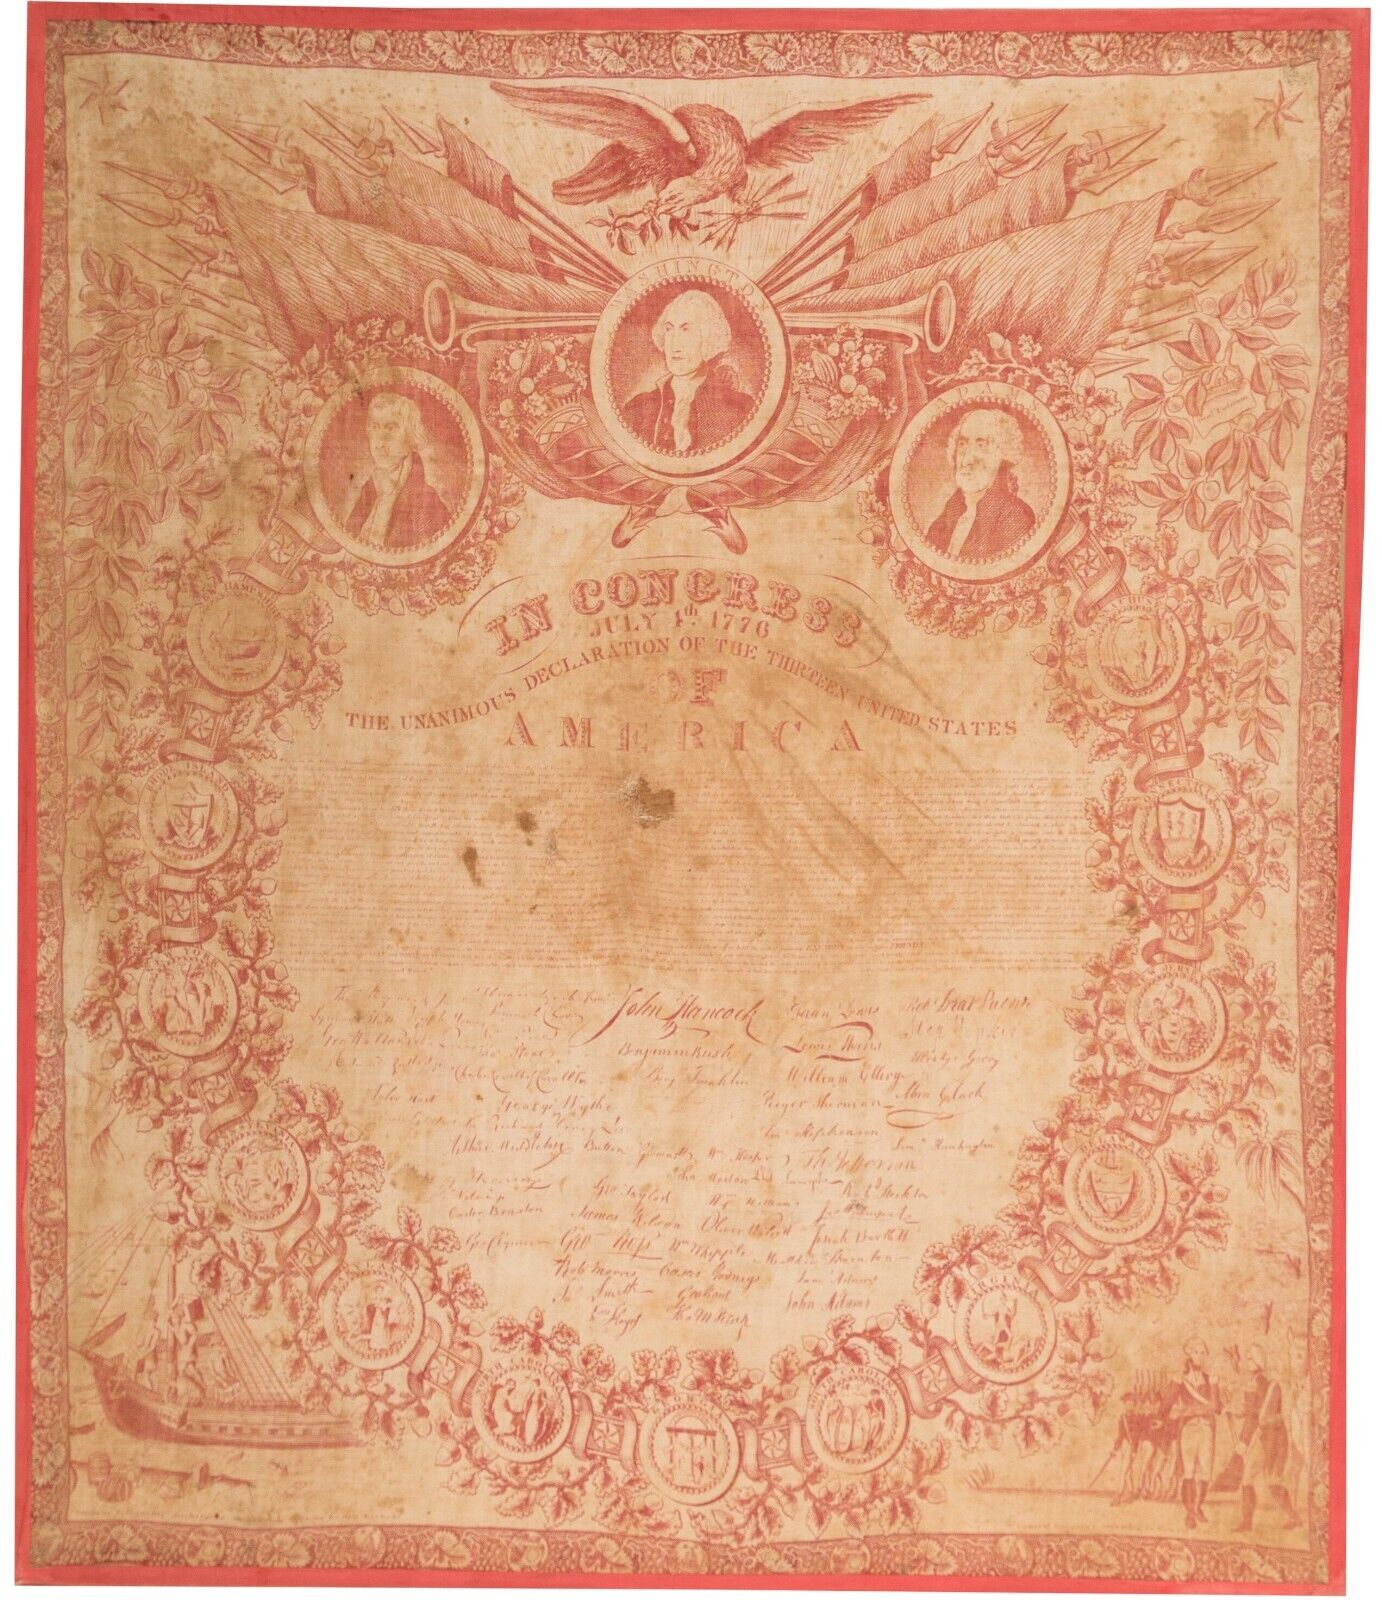 RARE Original 1826 Declaration of Independence Cotton Textile - Collins' Type 23